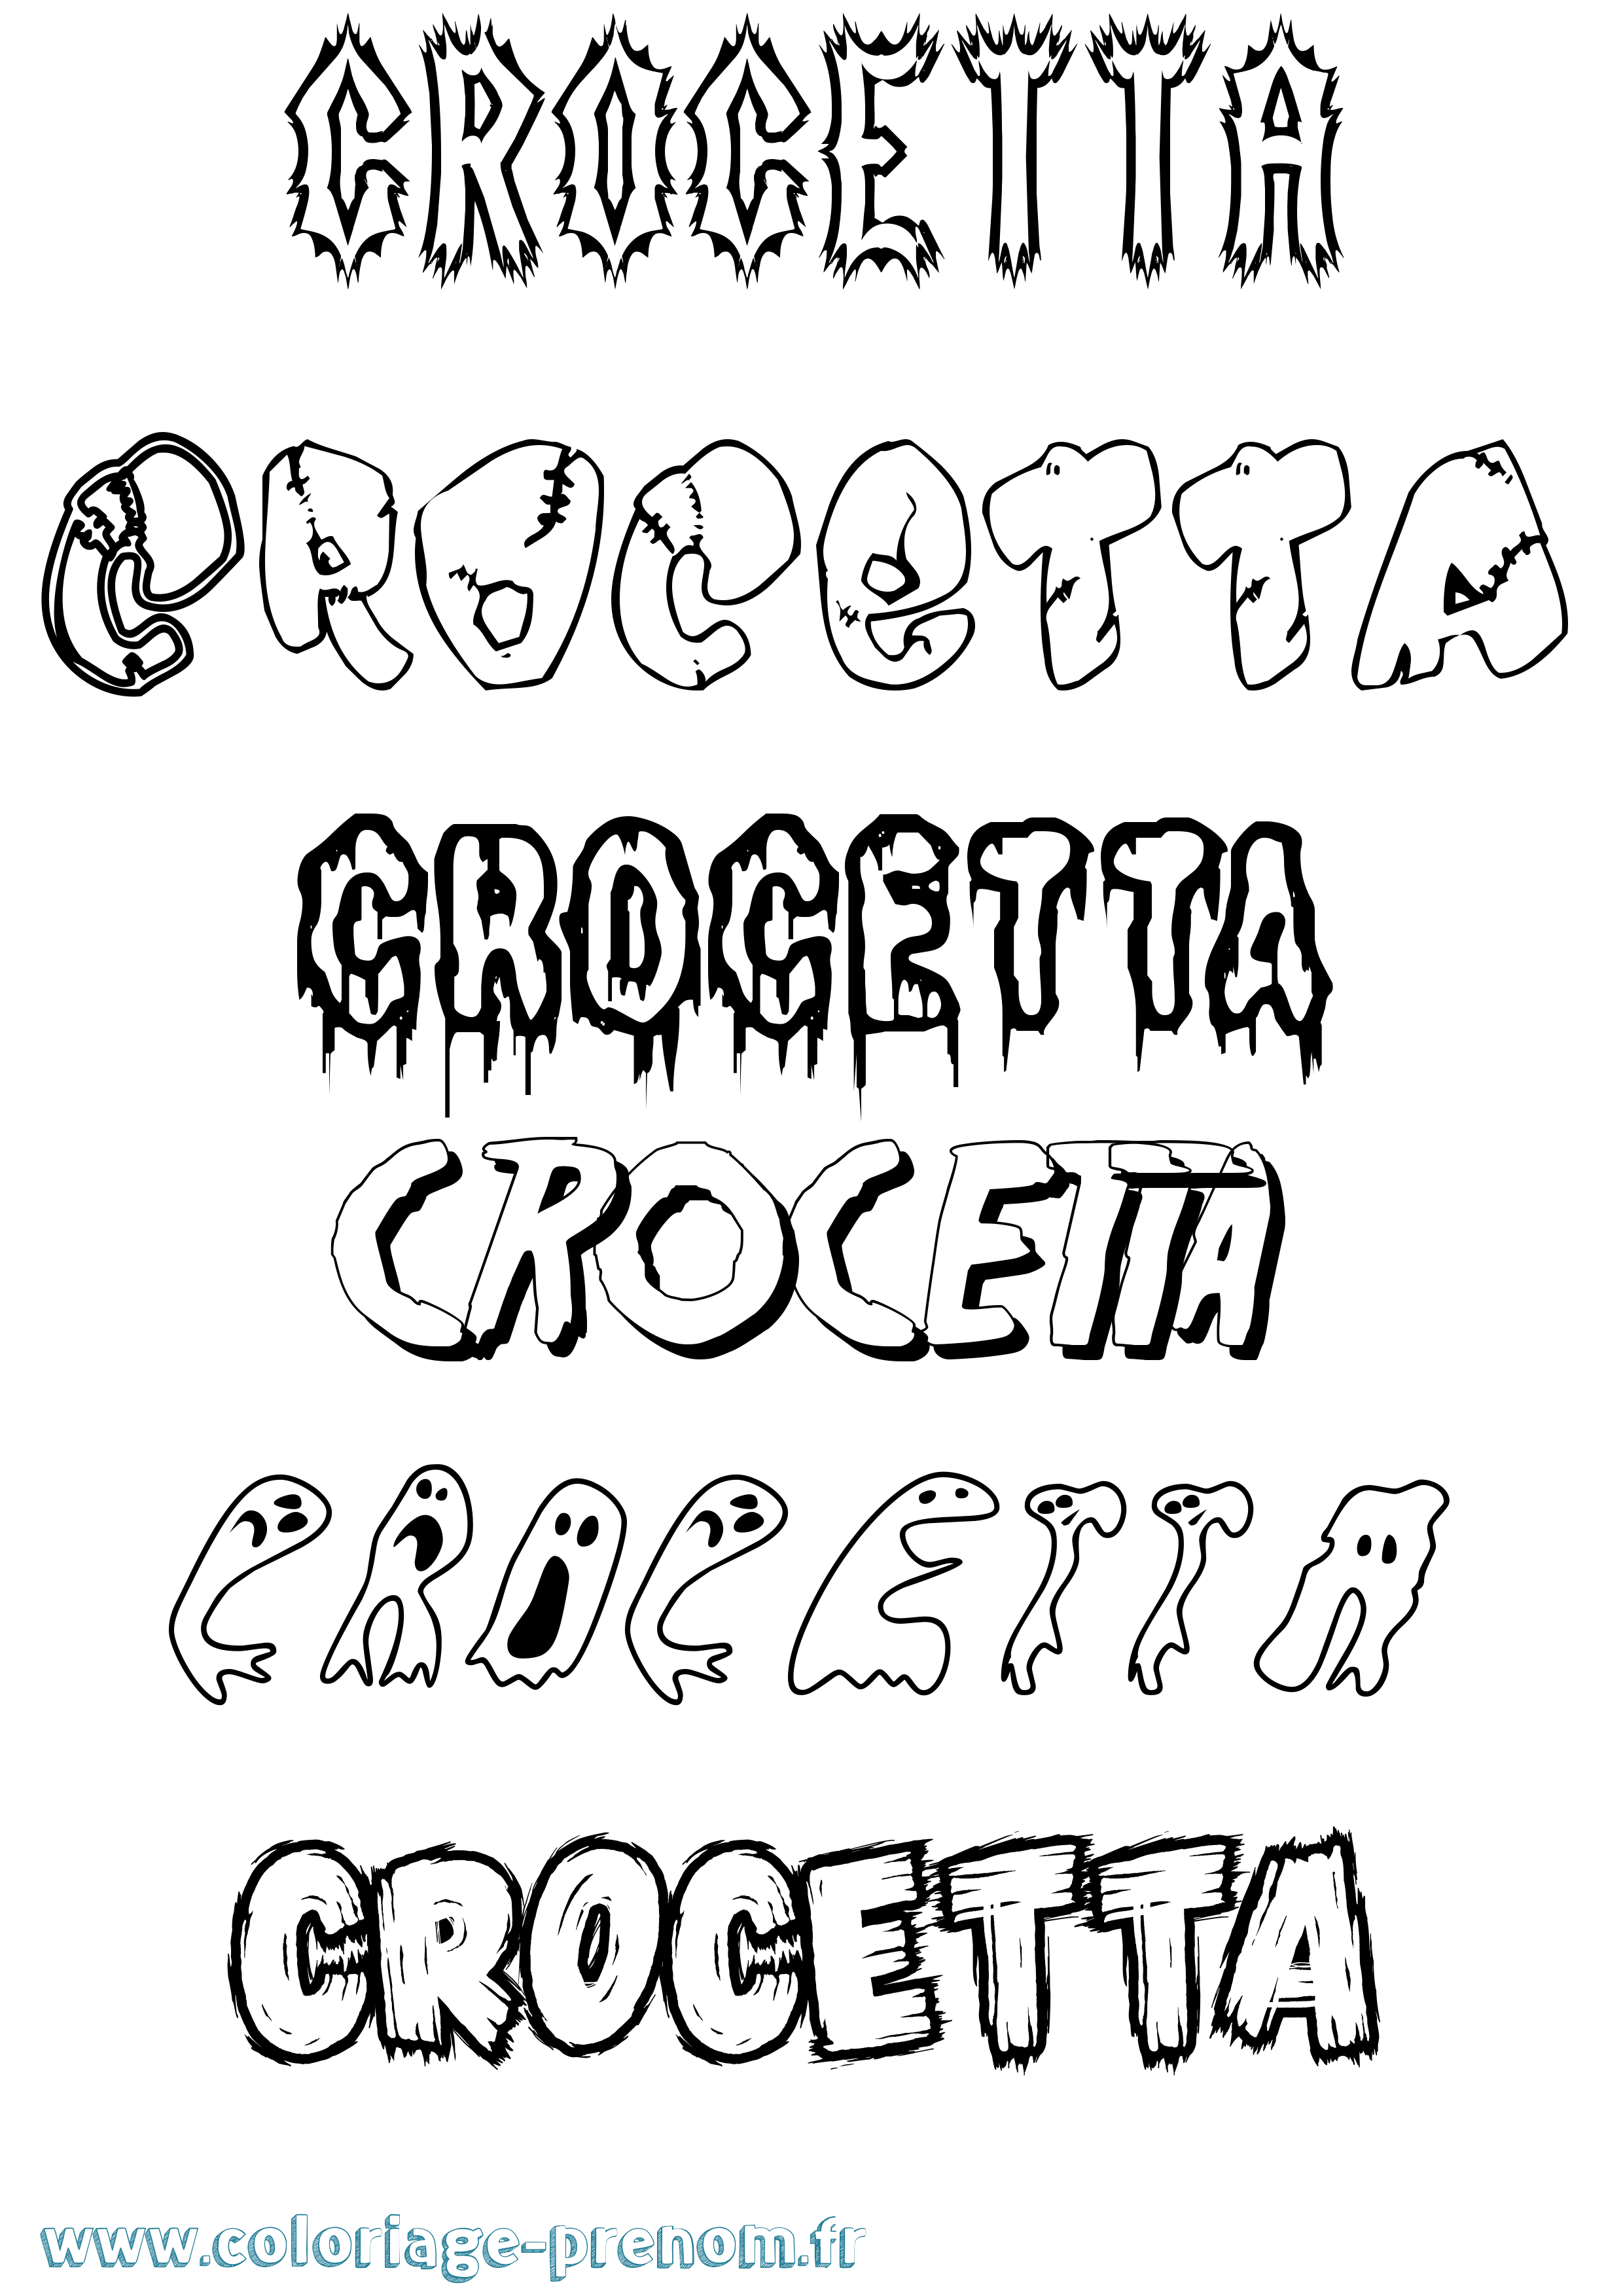 Coloriage prénom Crocetta Frisson